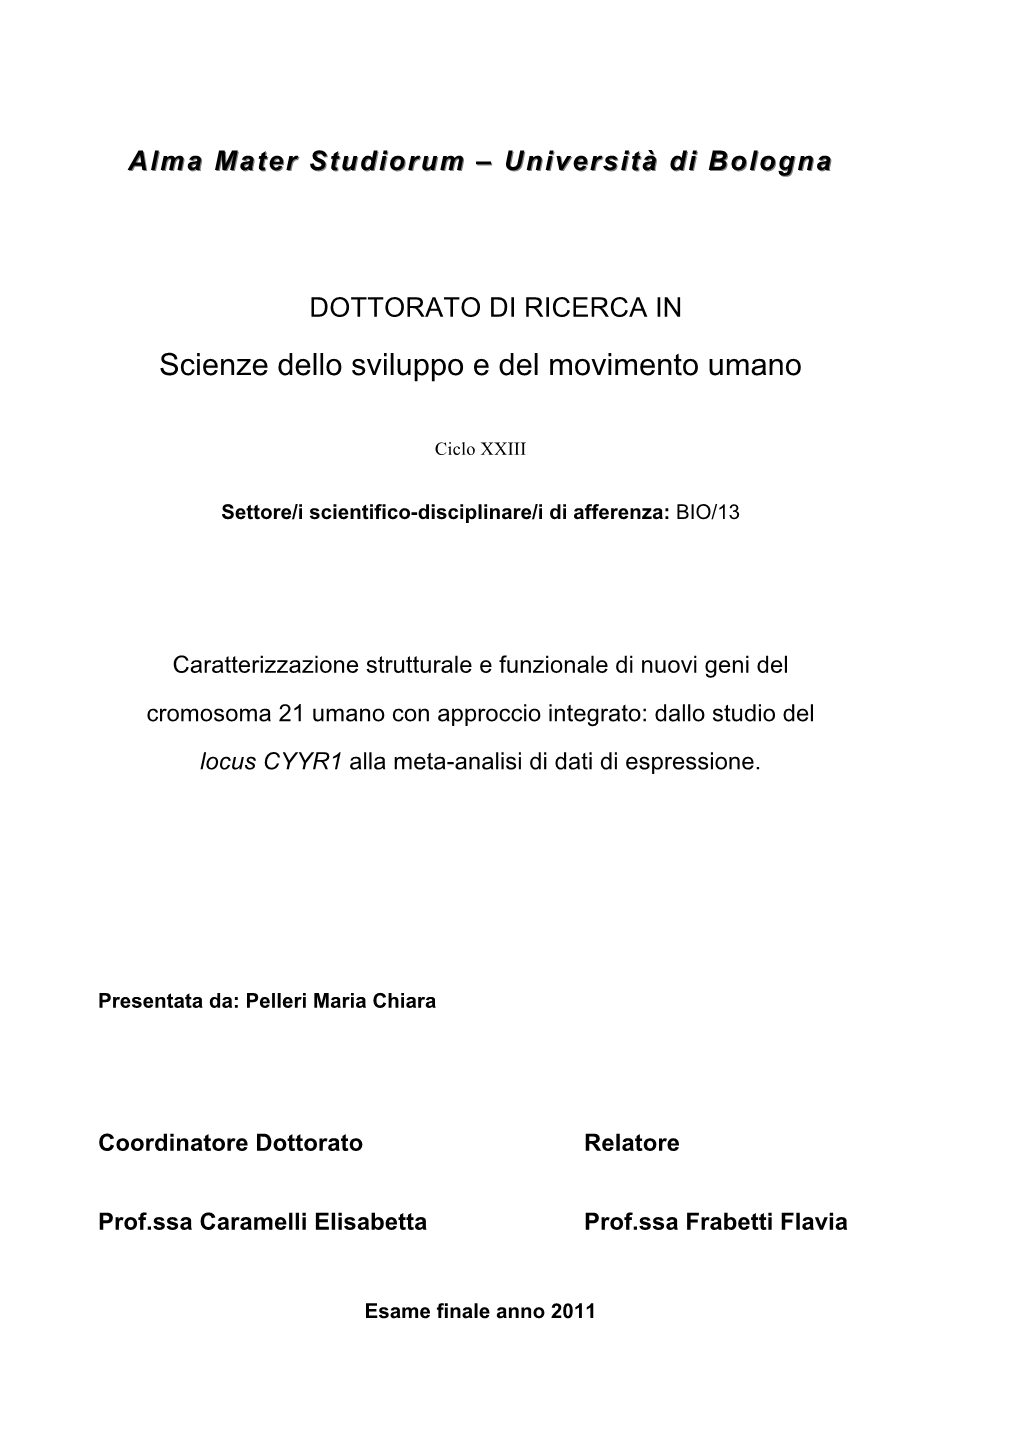 INTERNET Tesi Dottorato Maria Chiara DEFINITIVA